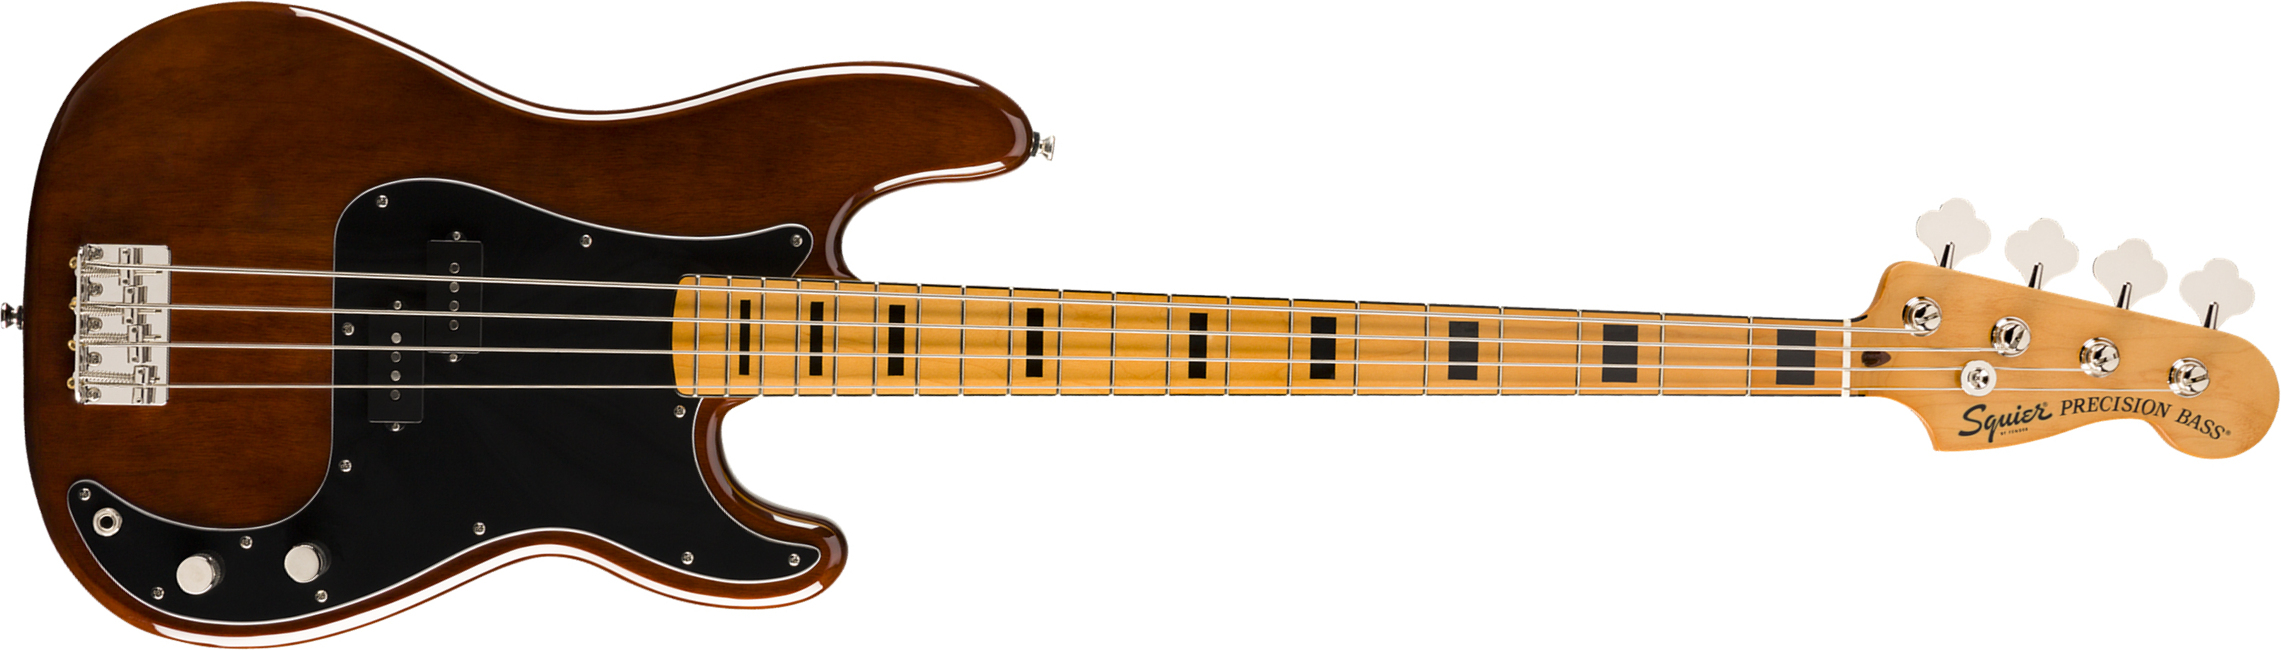 Squier Precision Bass '70s Classic Vibe 2019 Mn - Walnut - Solid body elektrische bas - Main picture